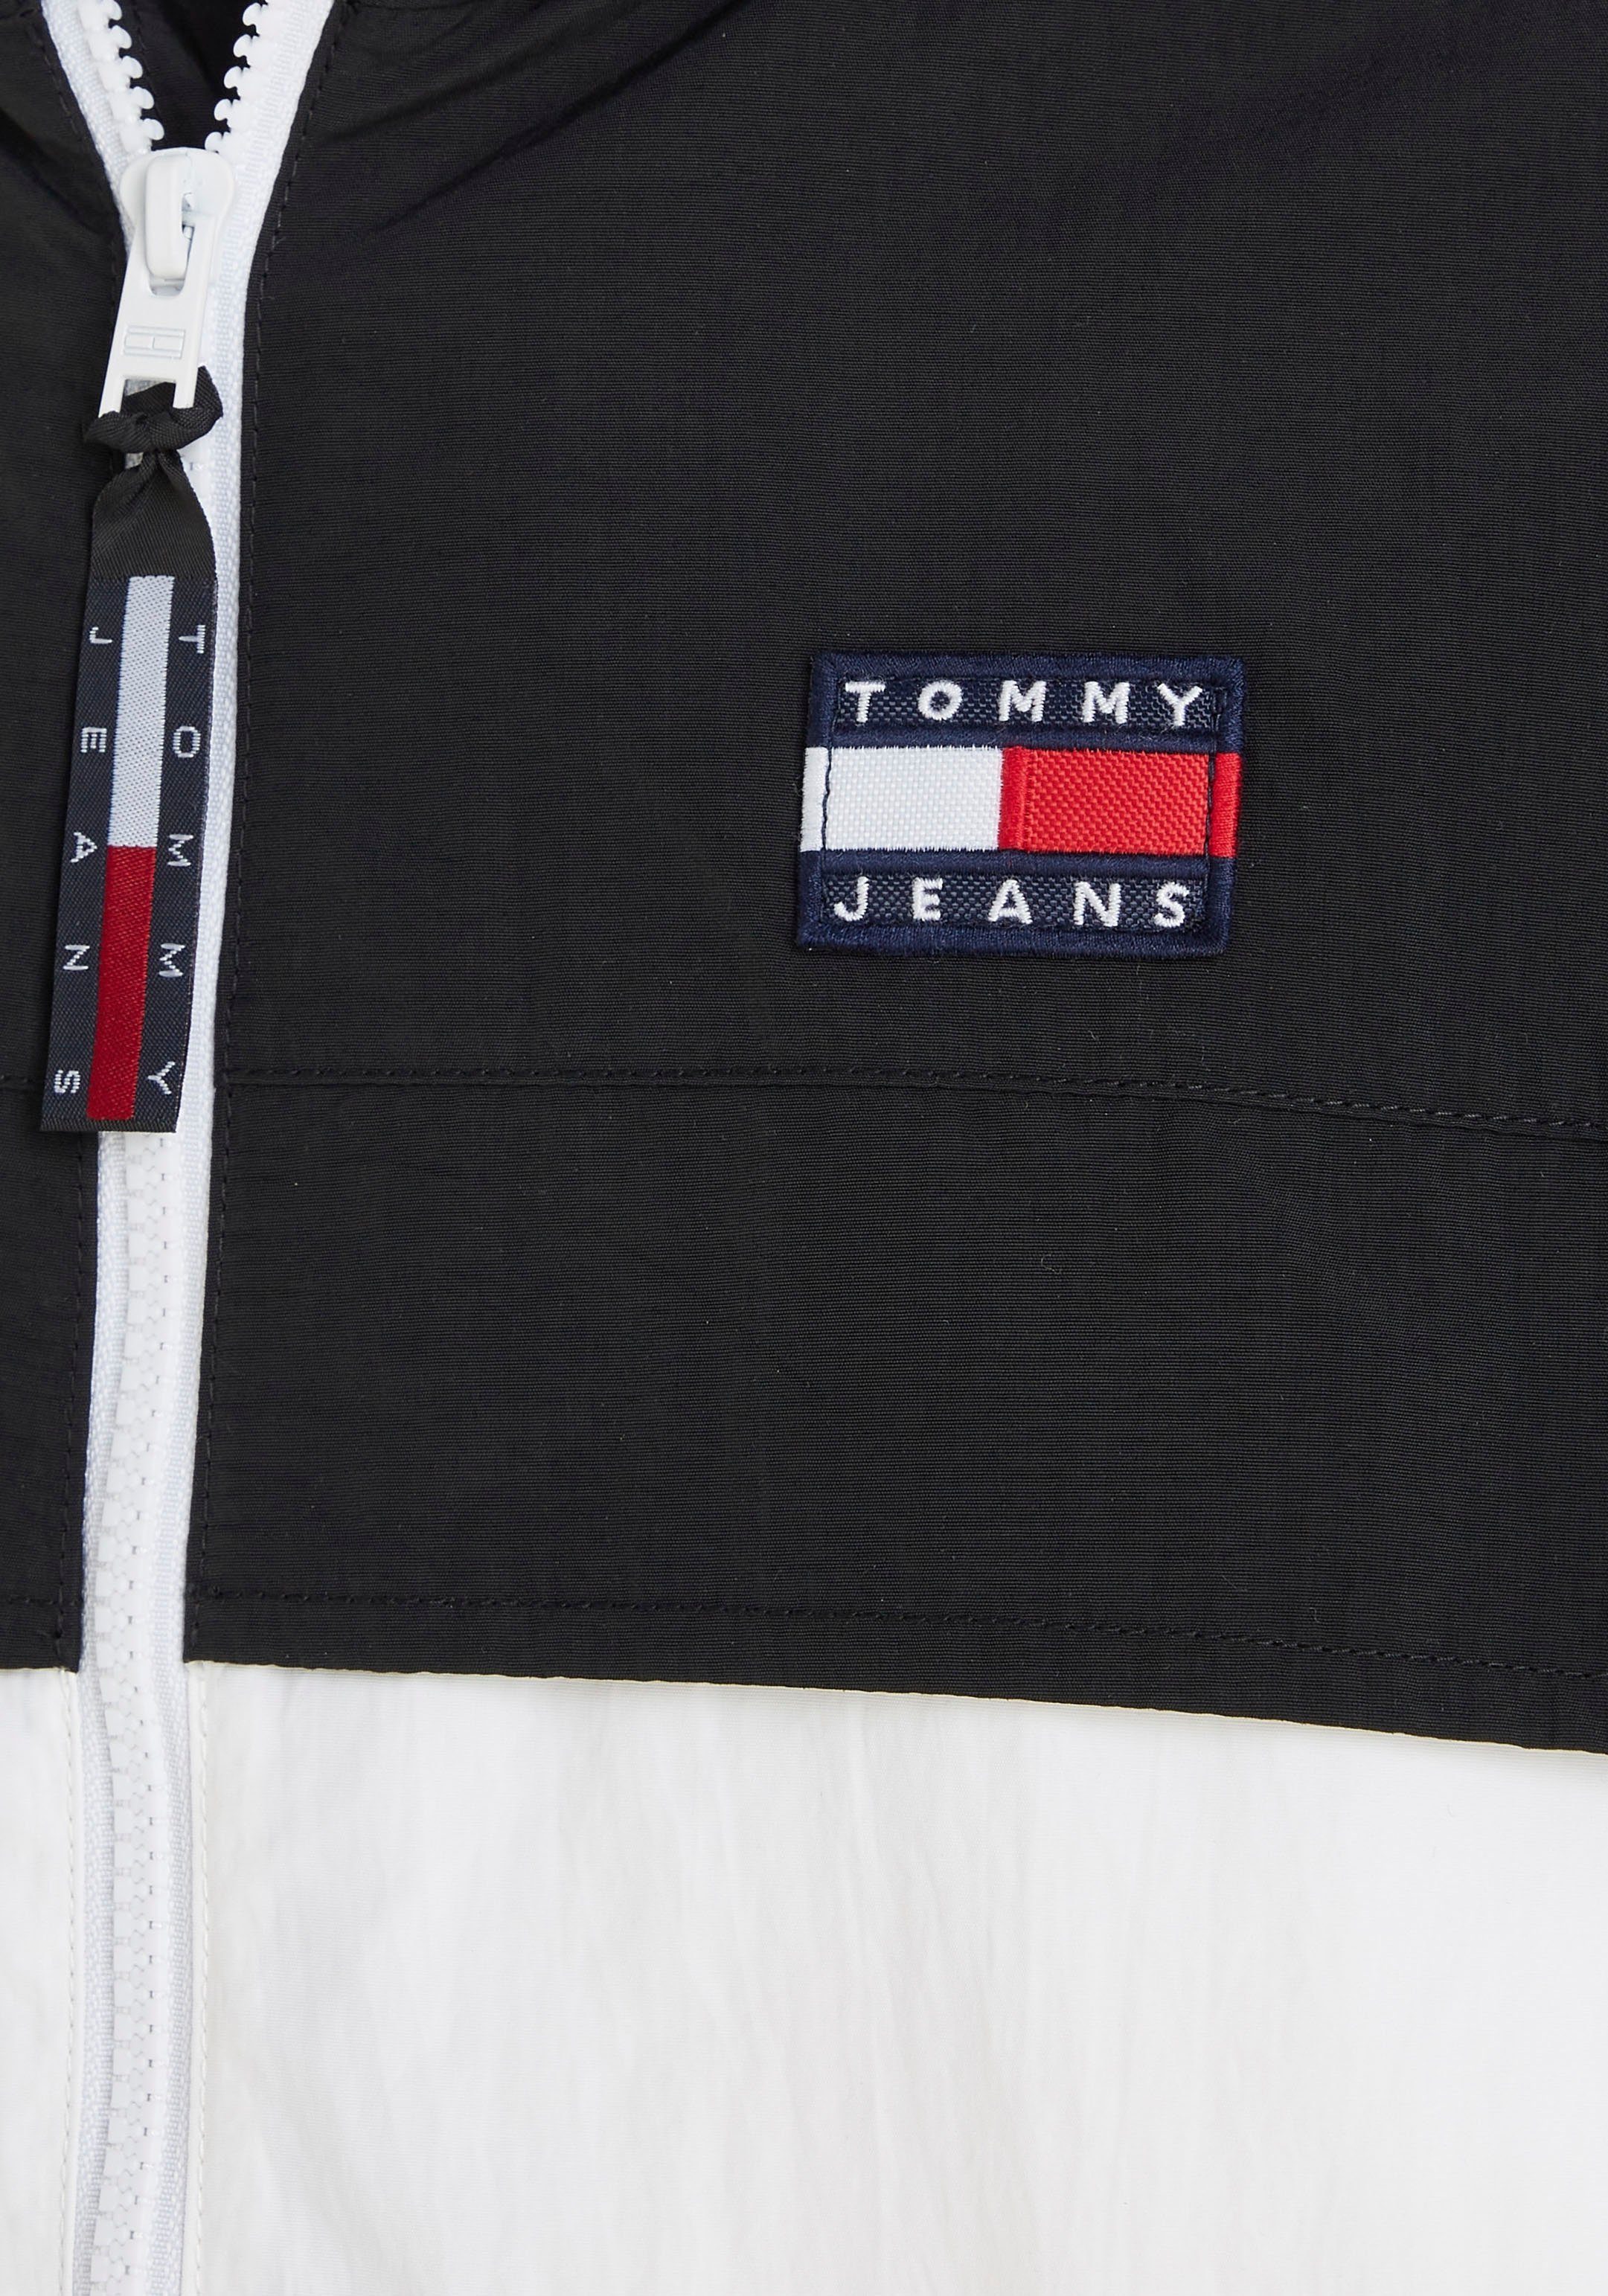 Windbreaker colorblocking CLBK Tommy CHICAGO Jeans WINDBREAKER TJM Black/DeepCrimson/White Design im